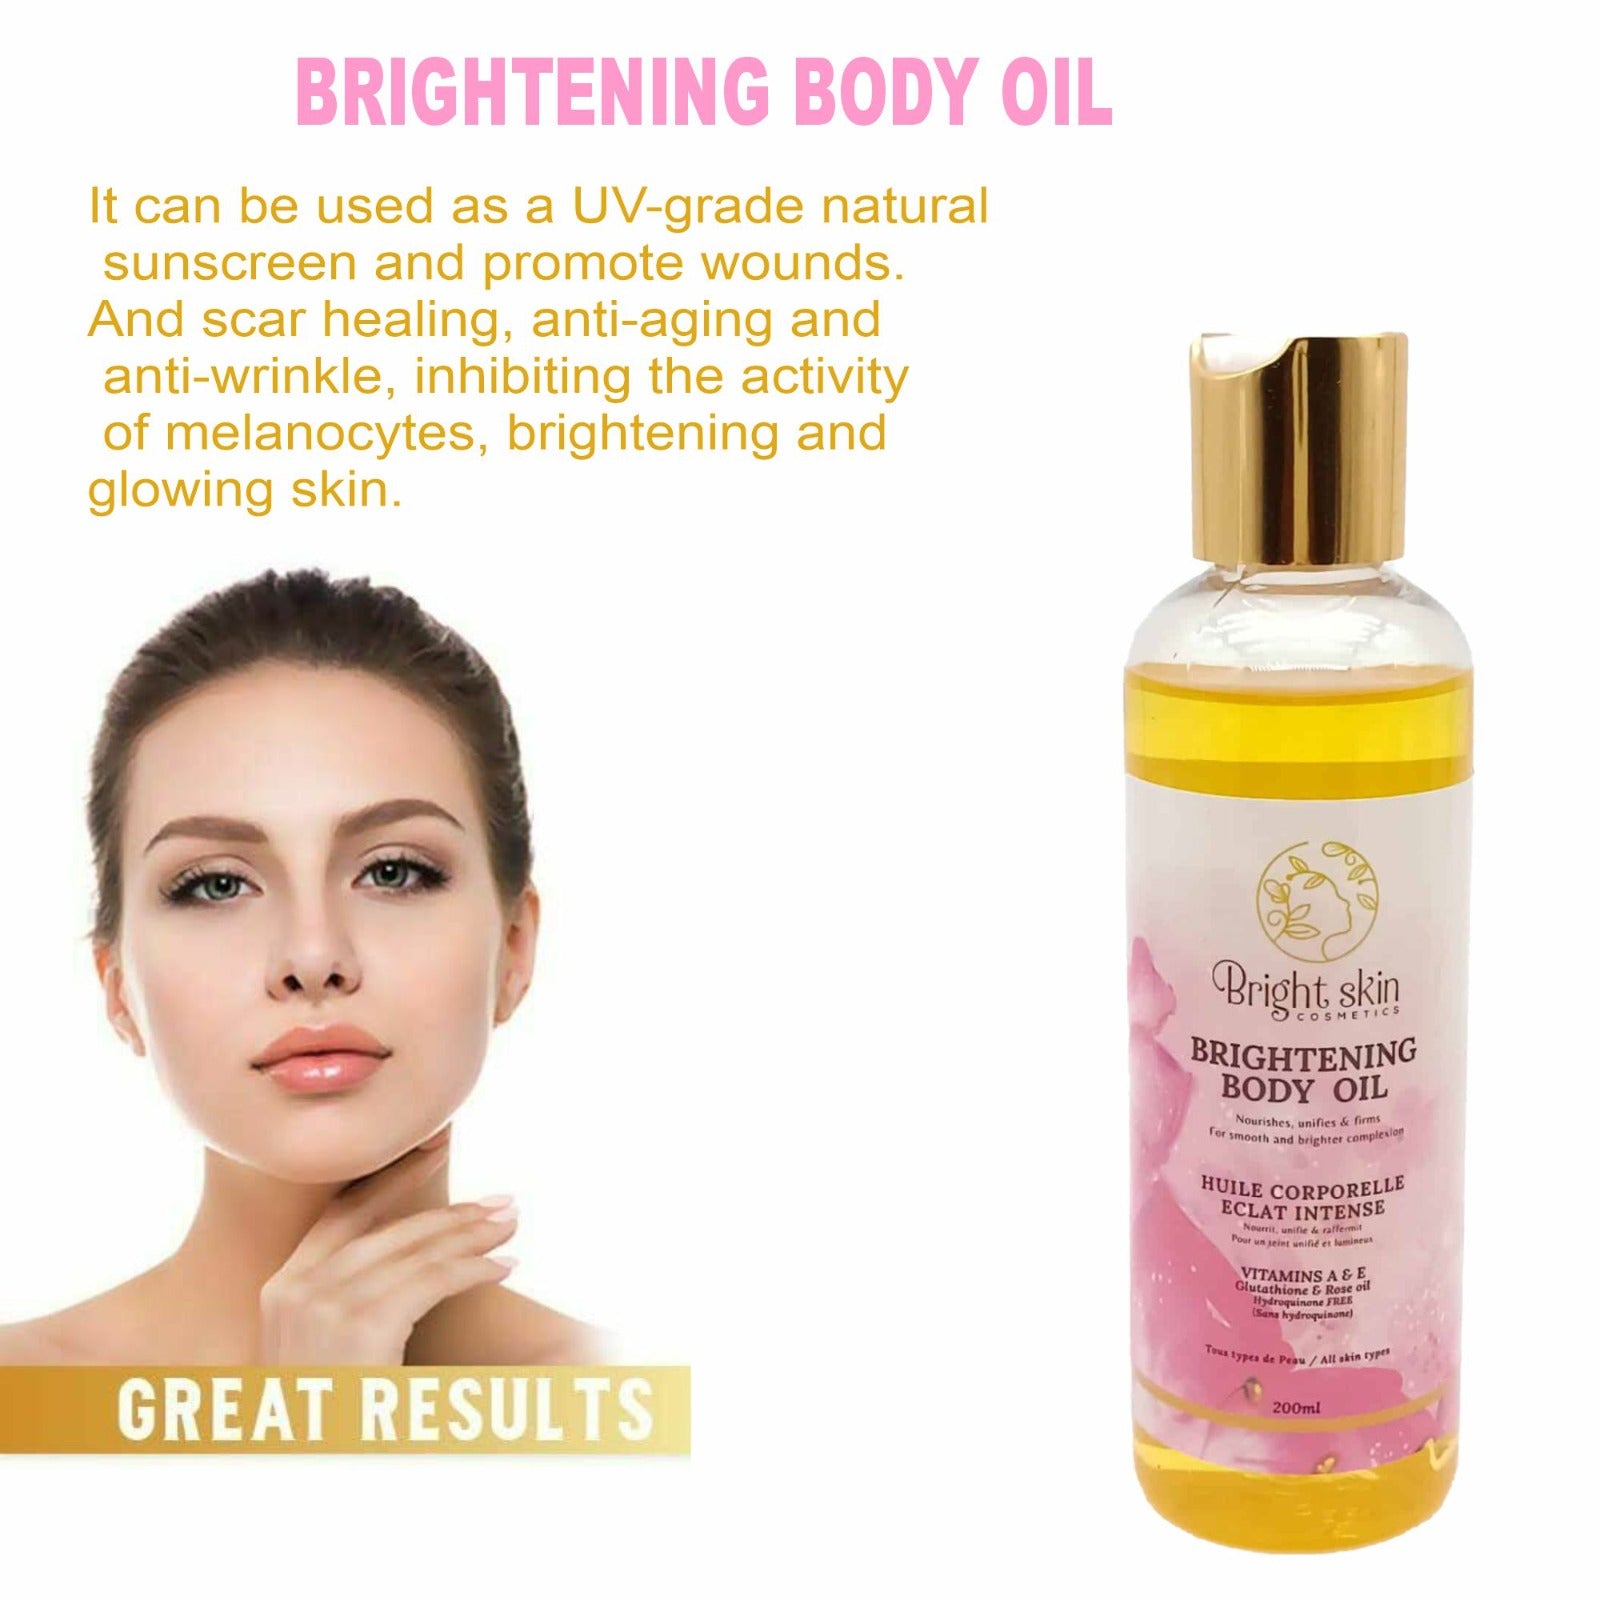 Brightening body oil